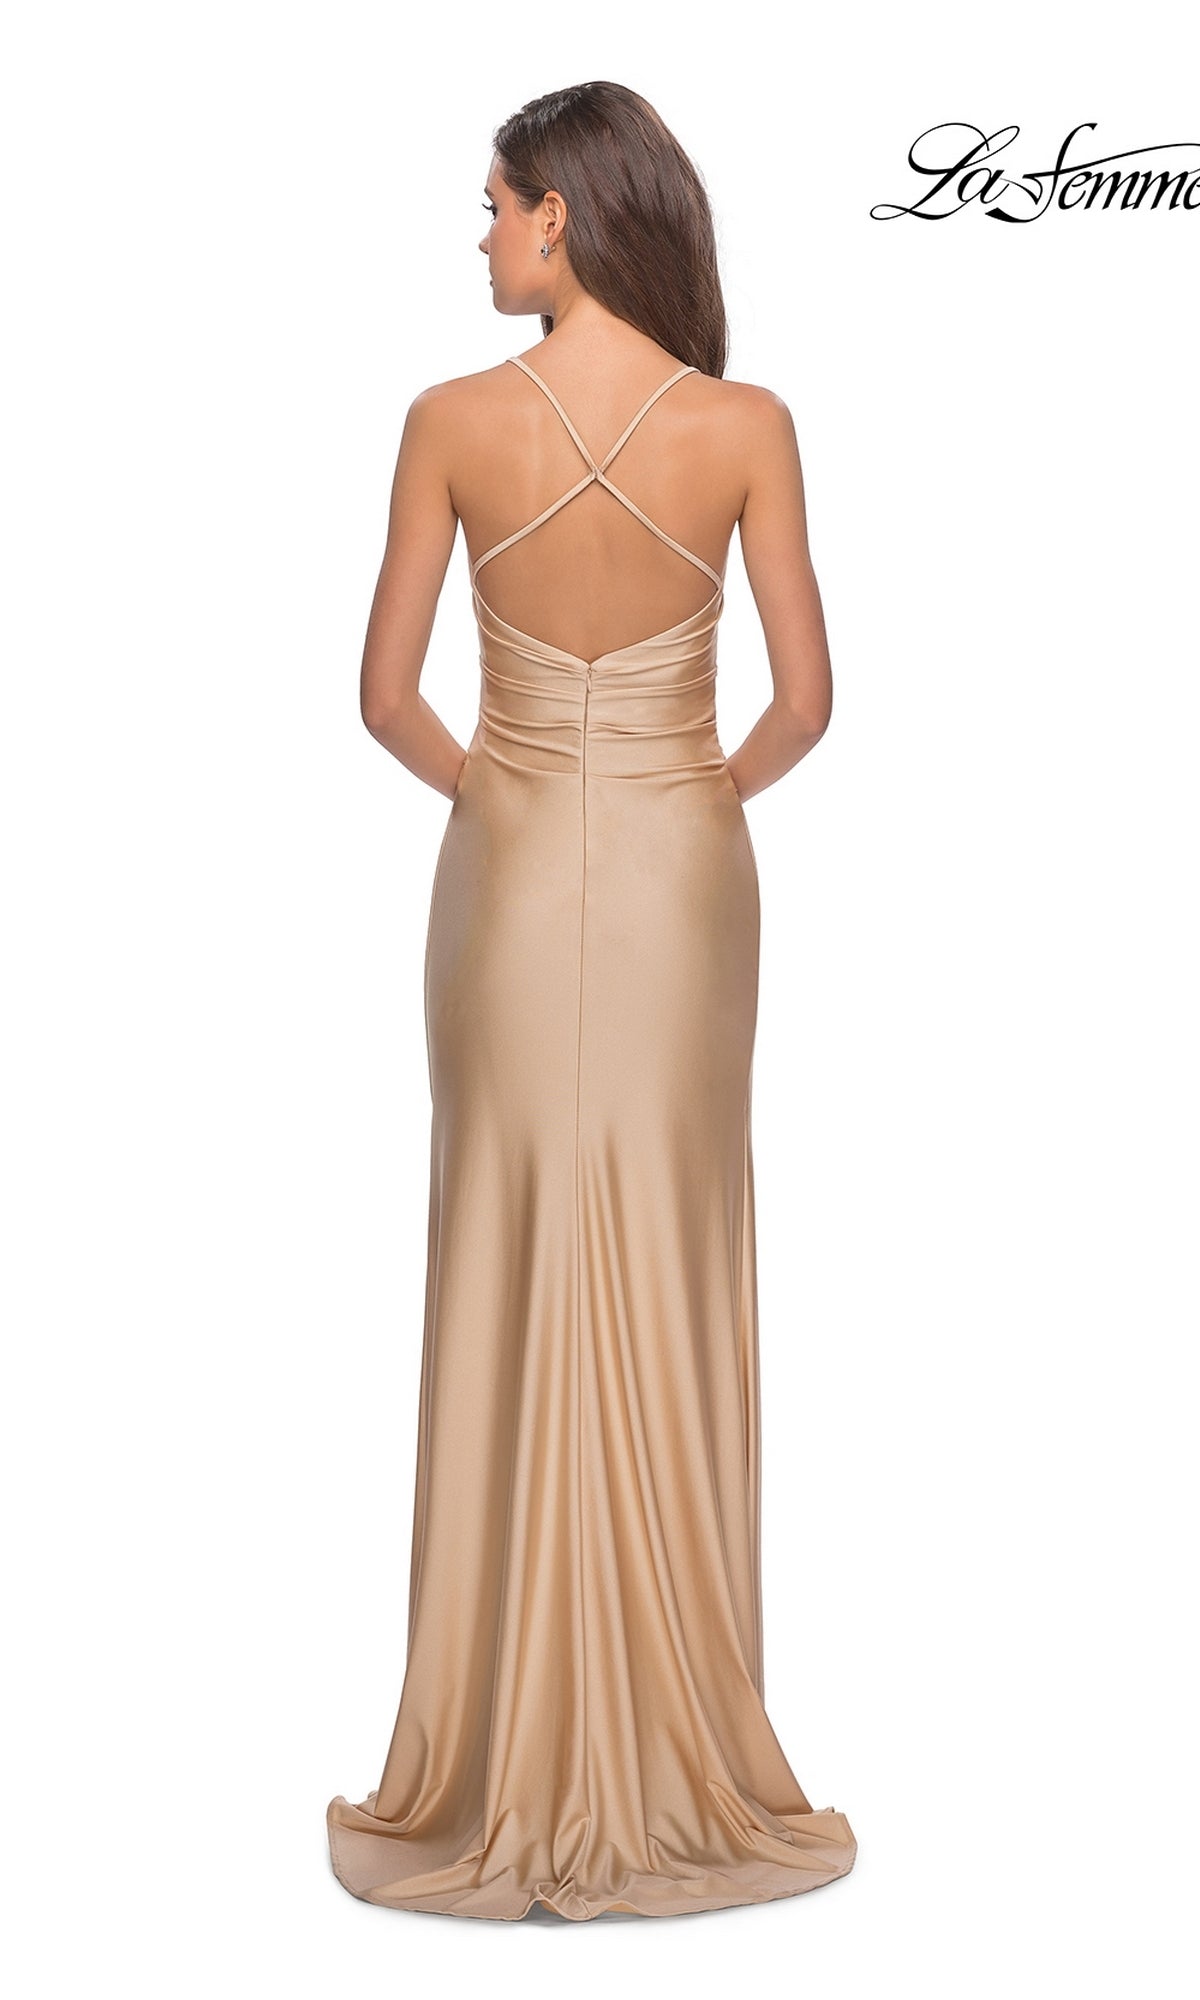  La Femme 28206 Formal Prom Dress